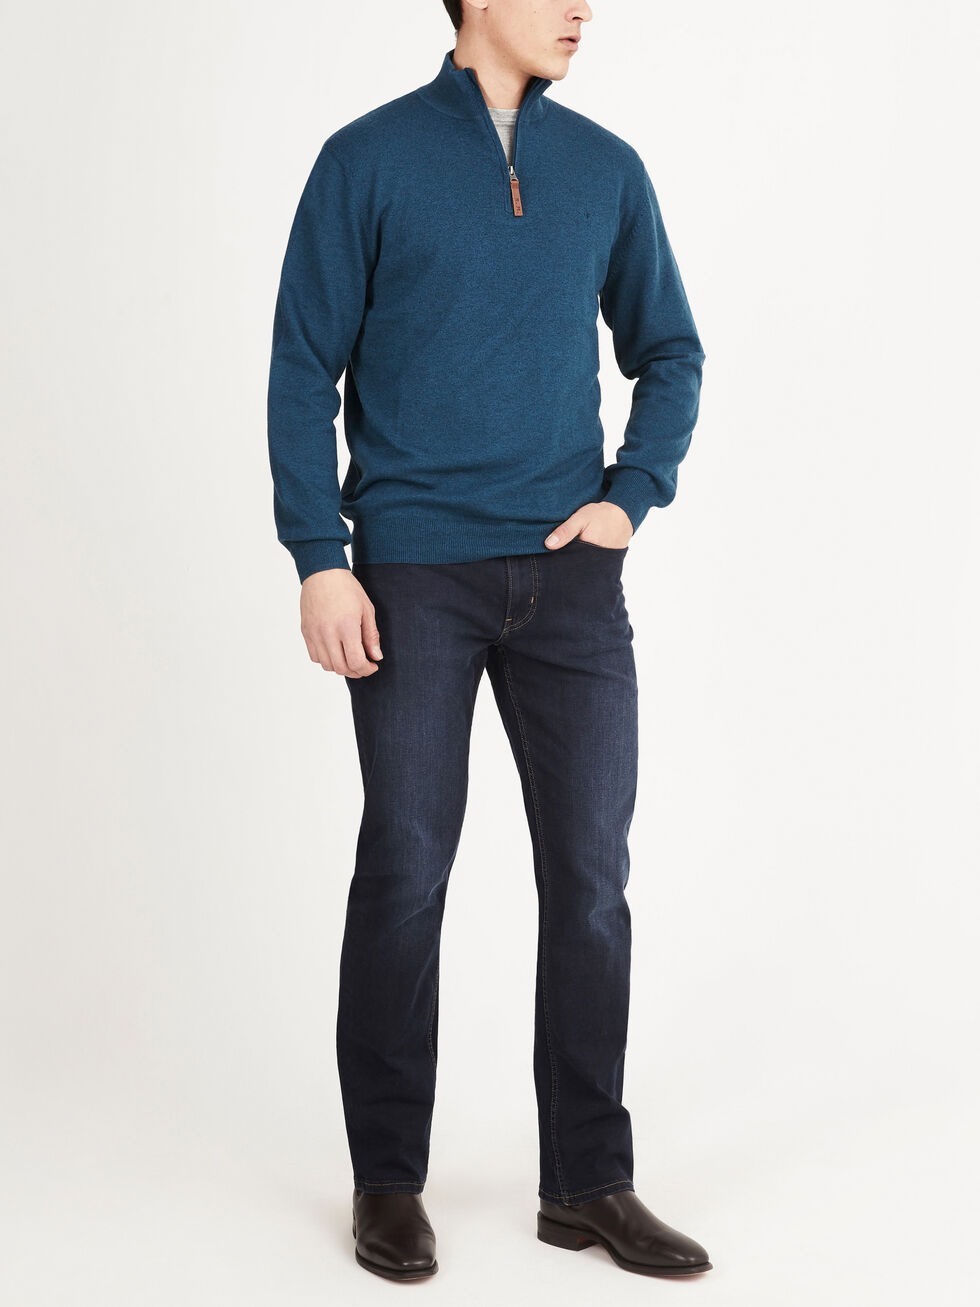 Buy RM Williams Earnest Sweater | Port Phillip Shop